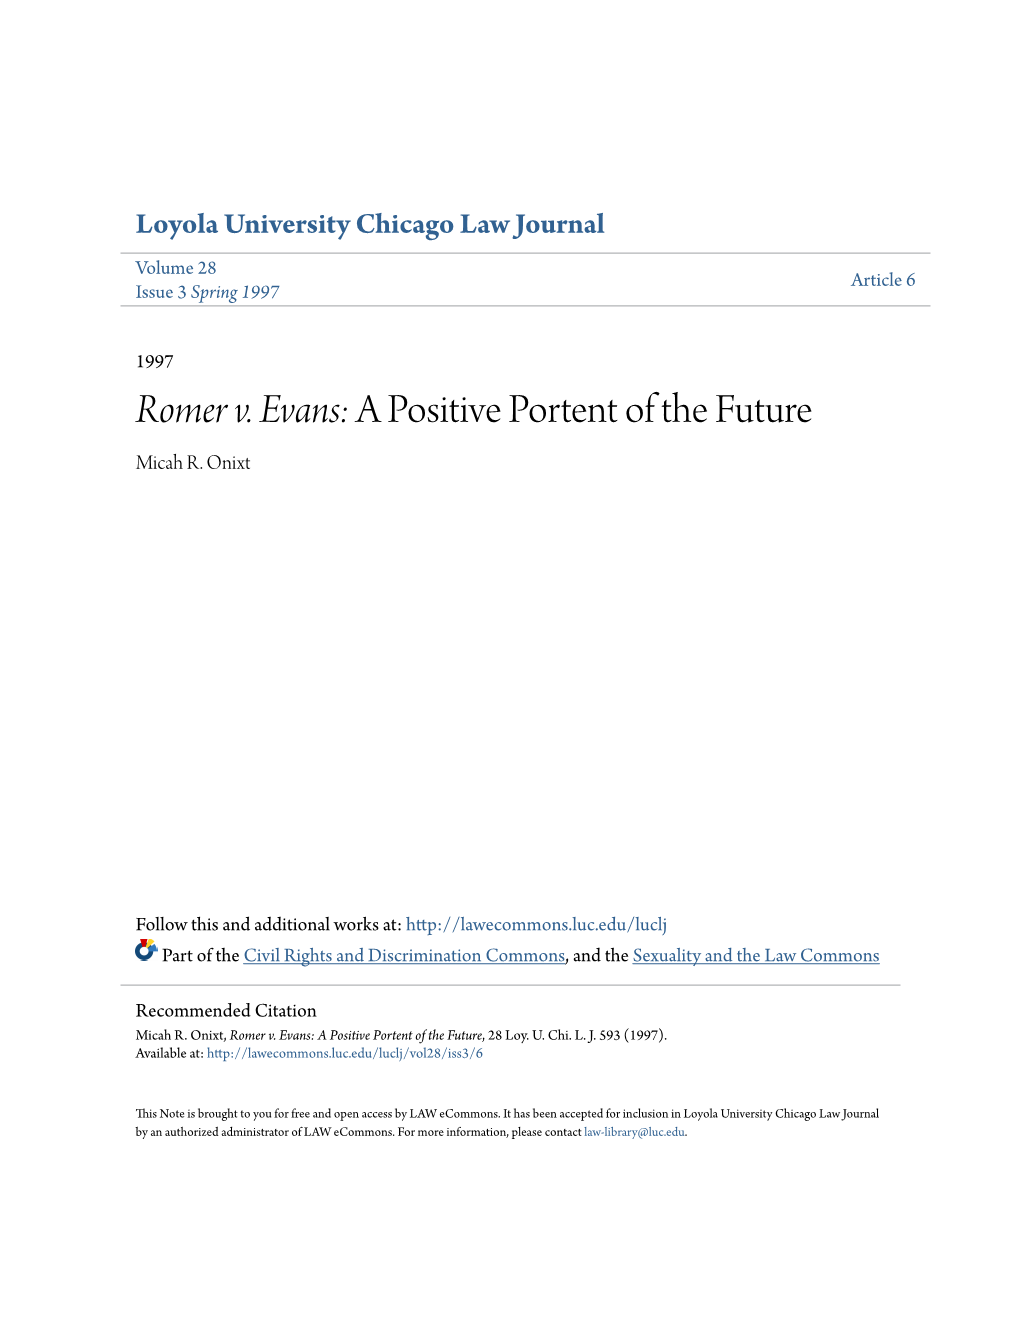 Romer V. Evans: a Positive Portent of the Future Micah R